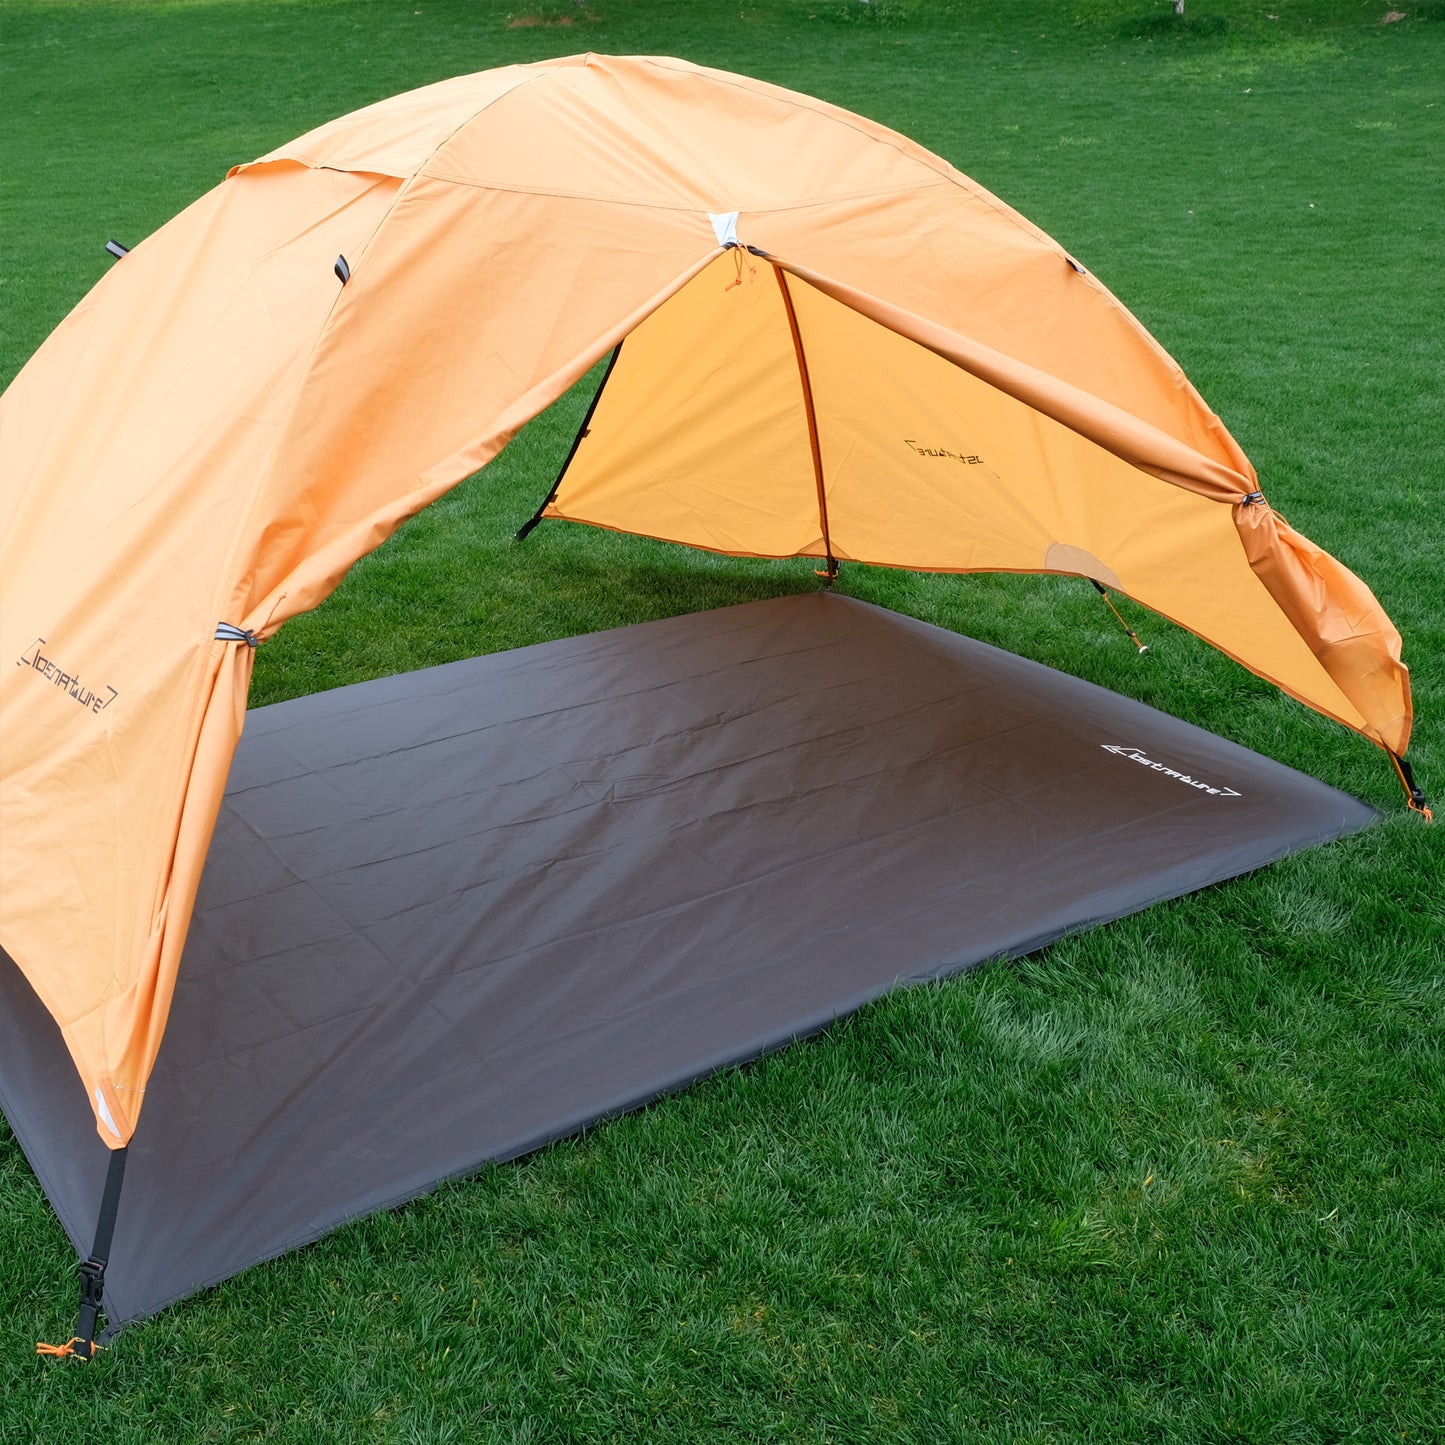 Clostnature 3-Person Tent Footprint - Waterproof Camping Tarp, Ultralight Ground Sheet Mat for Hiking, Backpacking, Hammock, Beach - Storage Bag Included